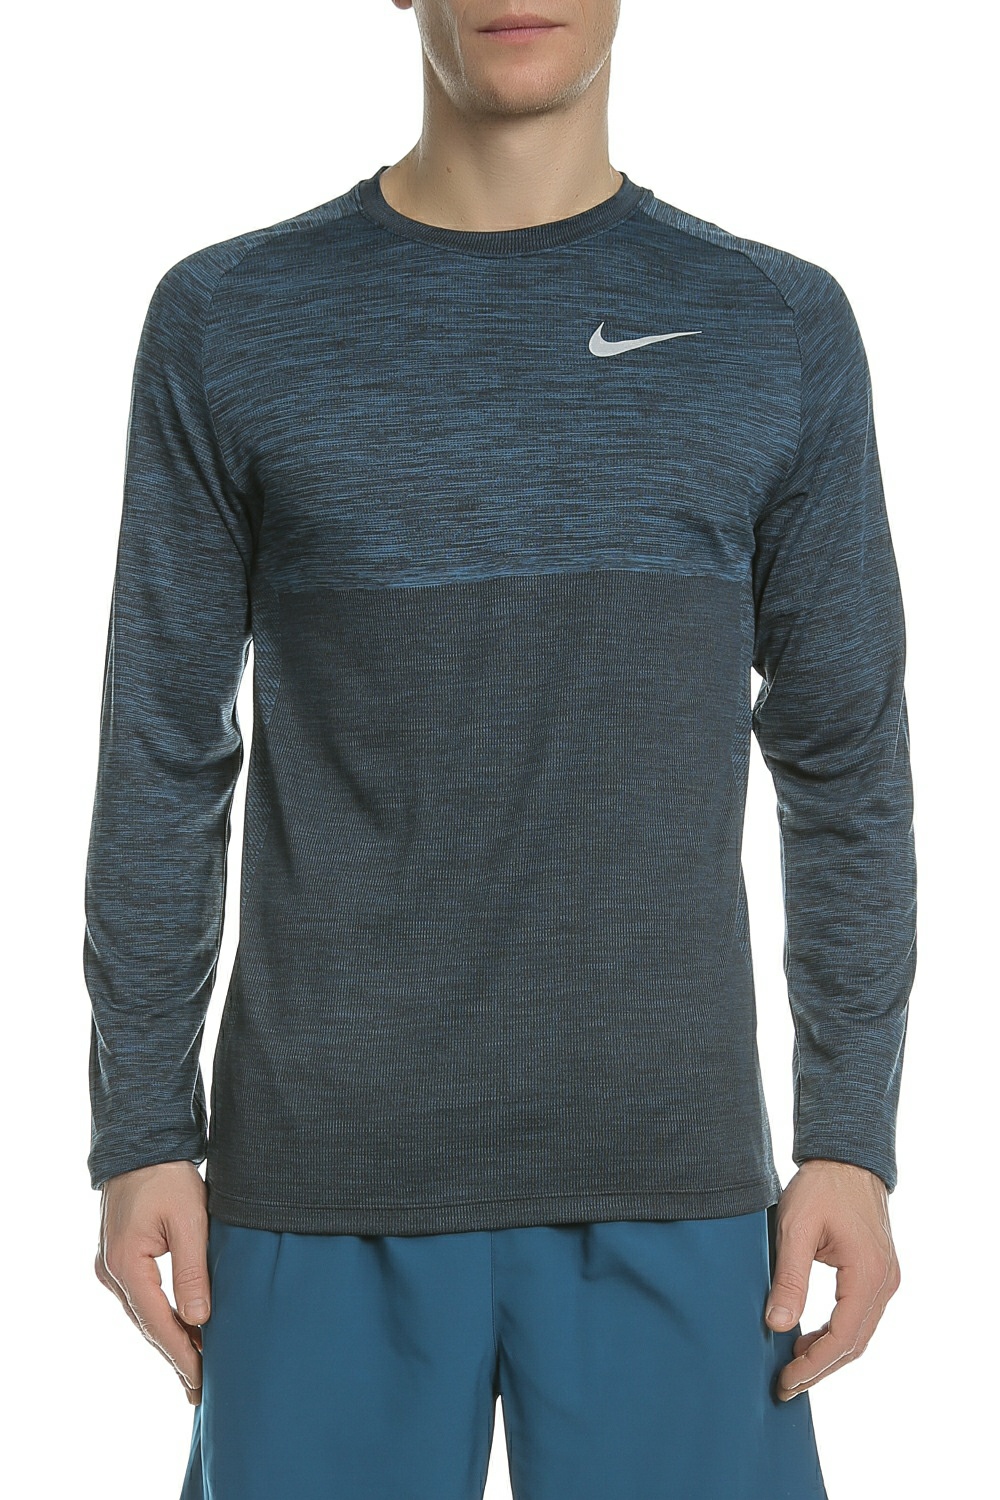 NIKE - Ανδρική μακρυμάνικη μπλούζα Nike DRY MEDALIST μπλε